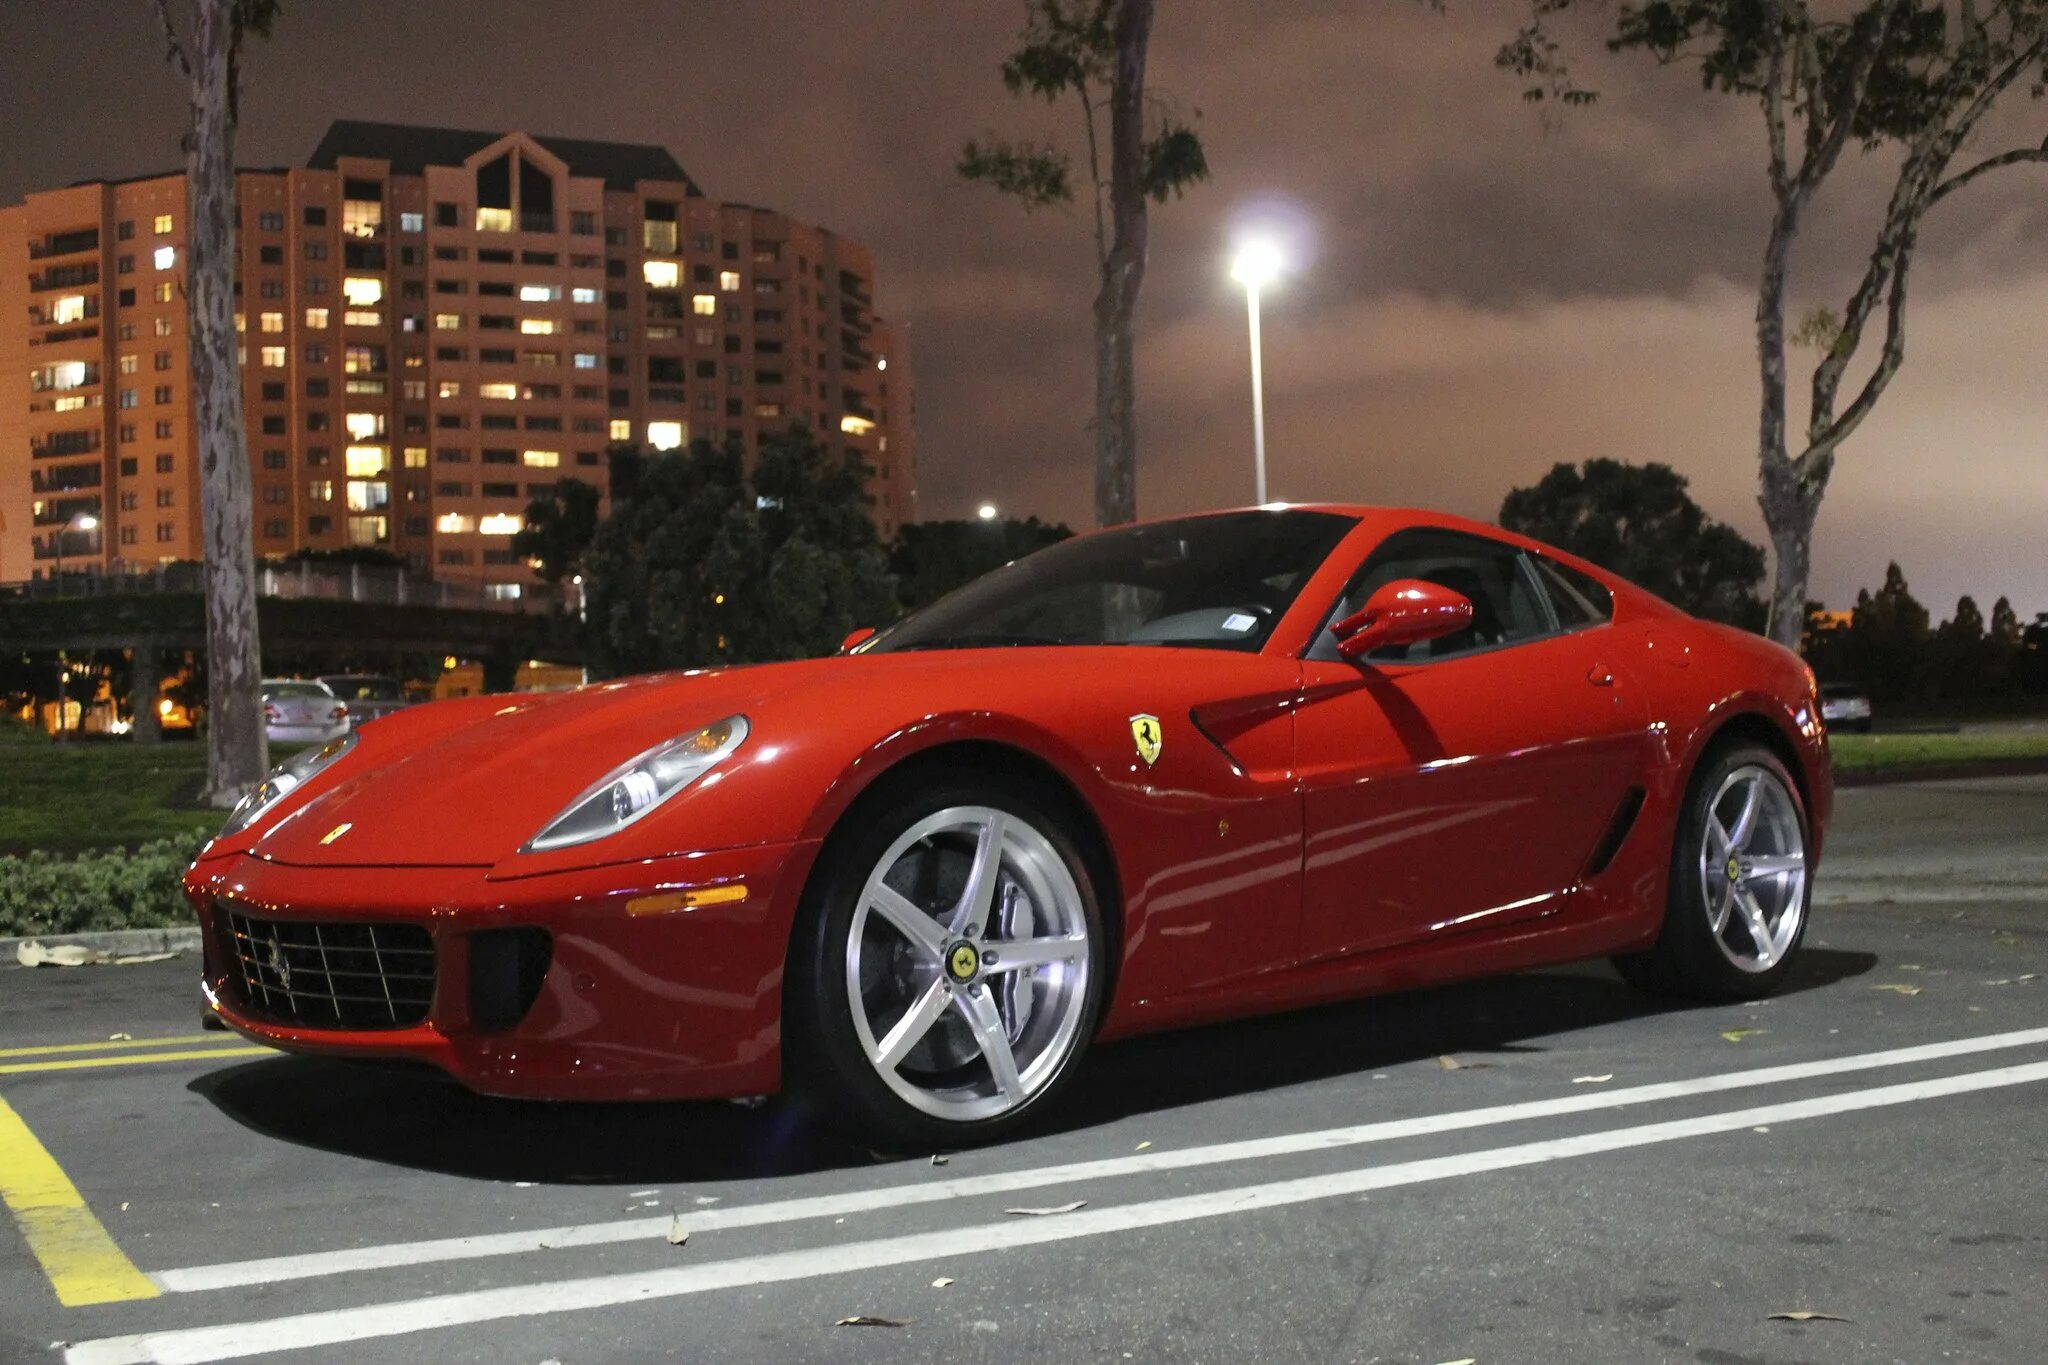 Ferrari fiorano. Купе Ferrari 599 GTB Fiorano,. Феррари 1000 Italia. Ferrari 599 GTB Fiorano Wallpapers. Феррари купе картинки на обои.